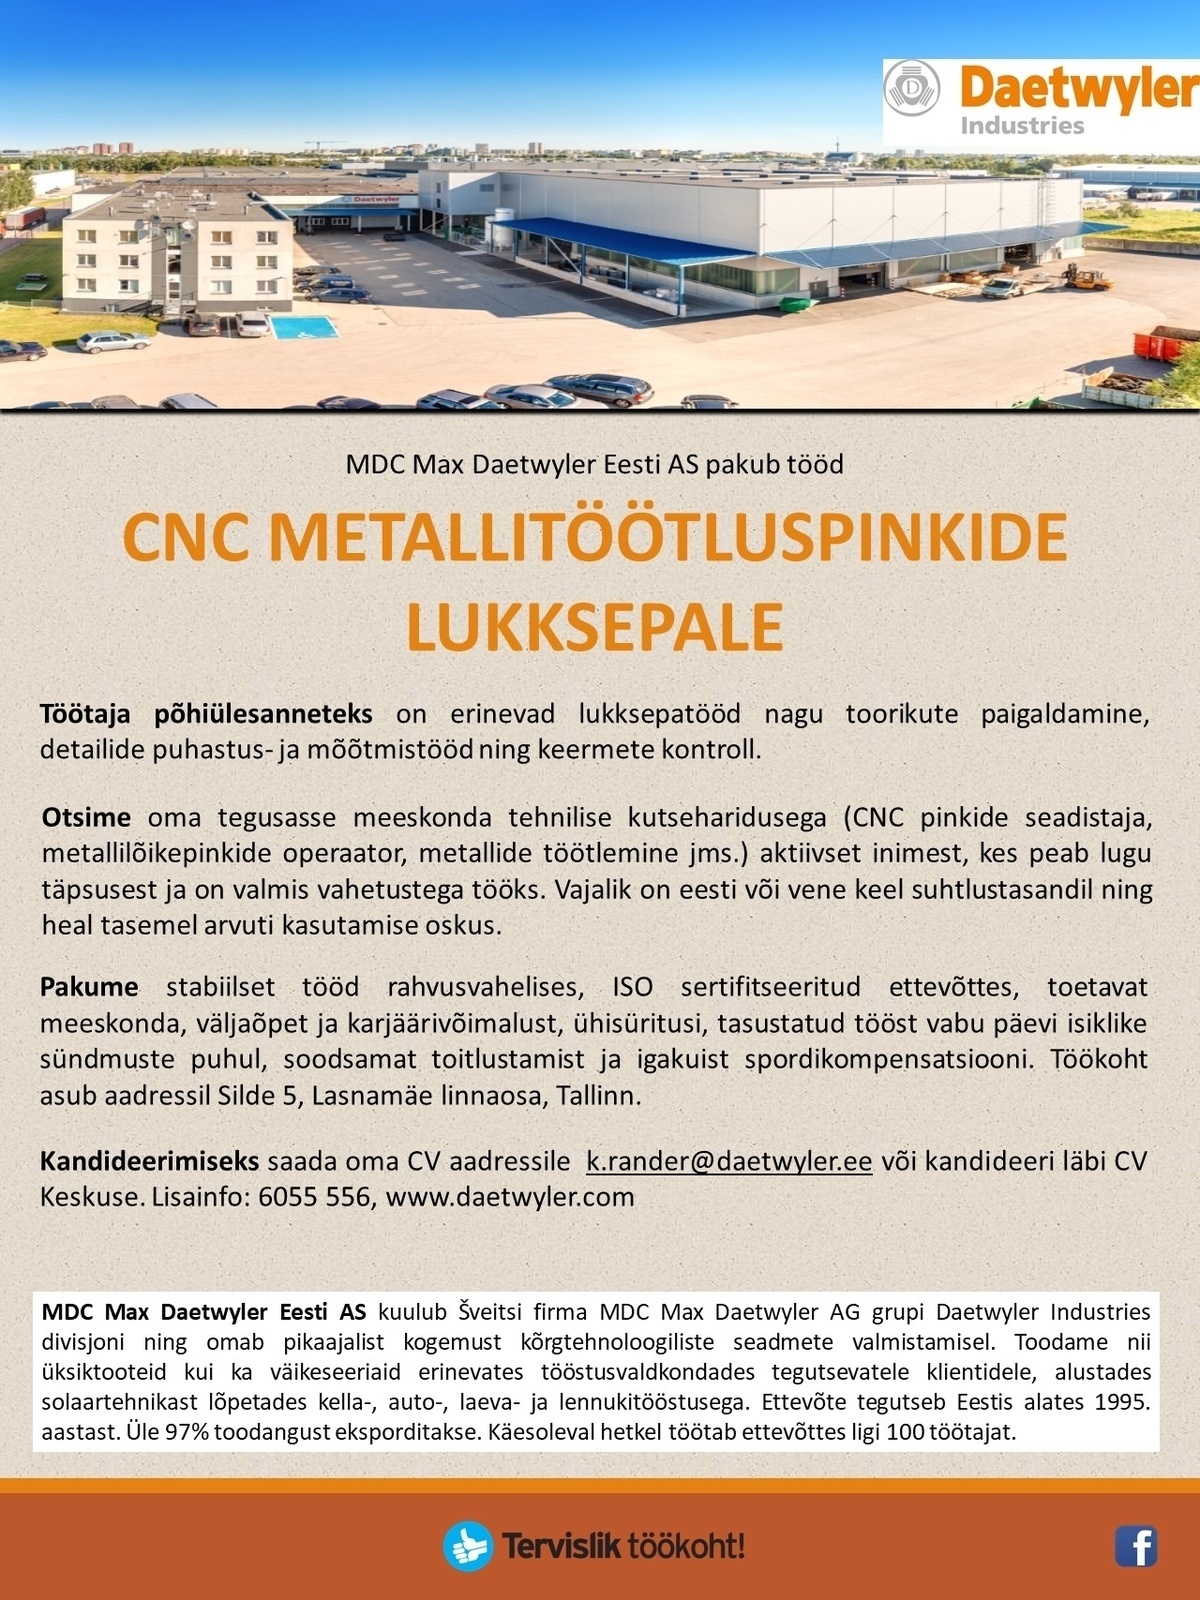 MDC Max Daetwyler Eesti AS CNC metallitöötluspinkide lukksepp